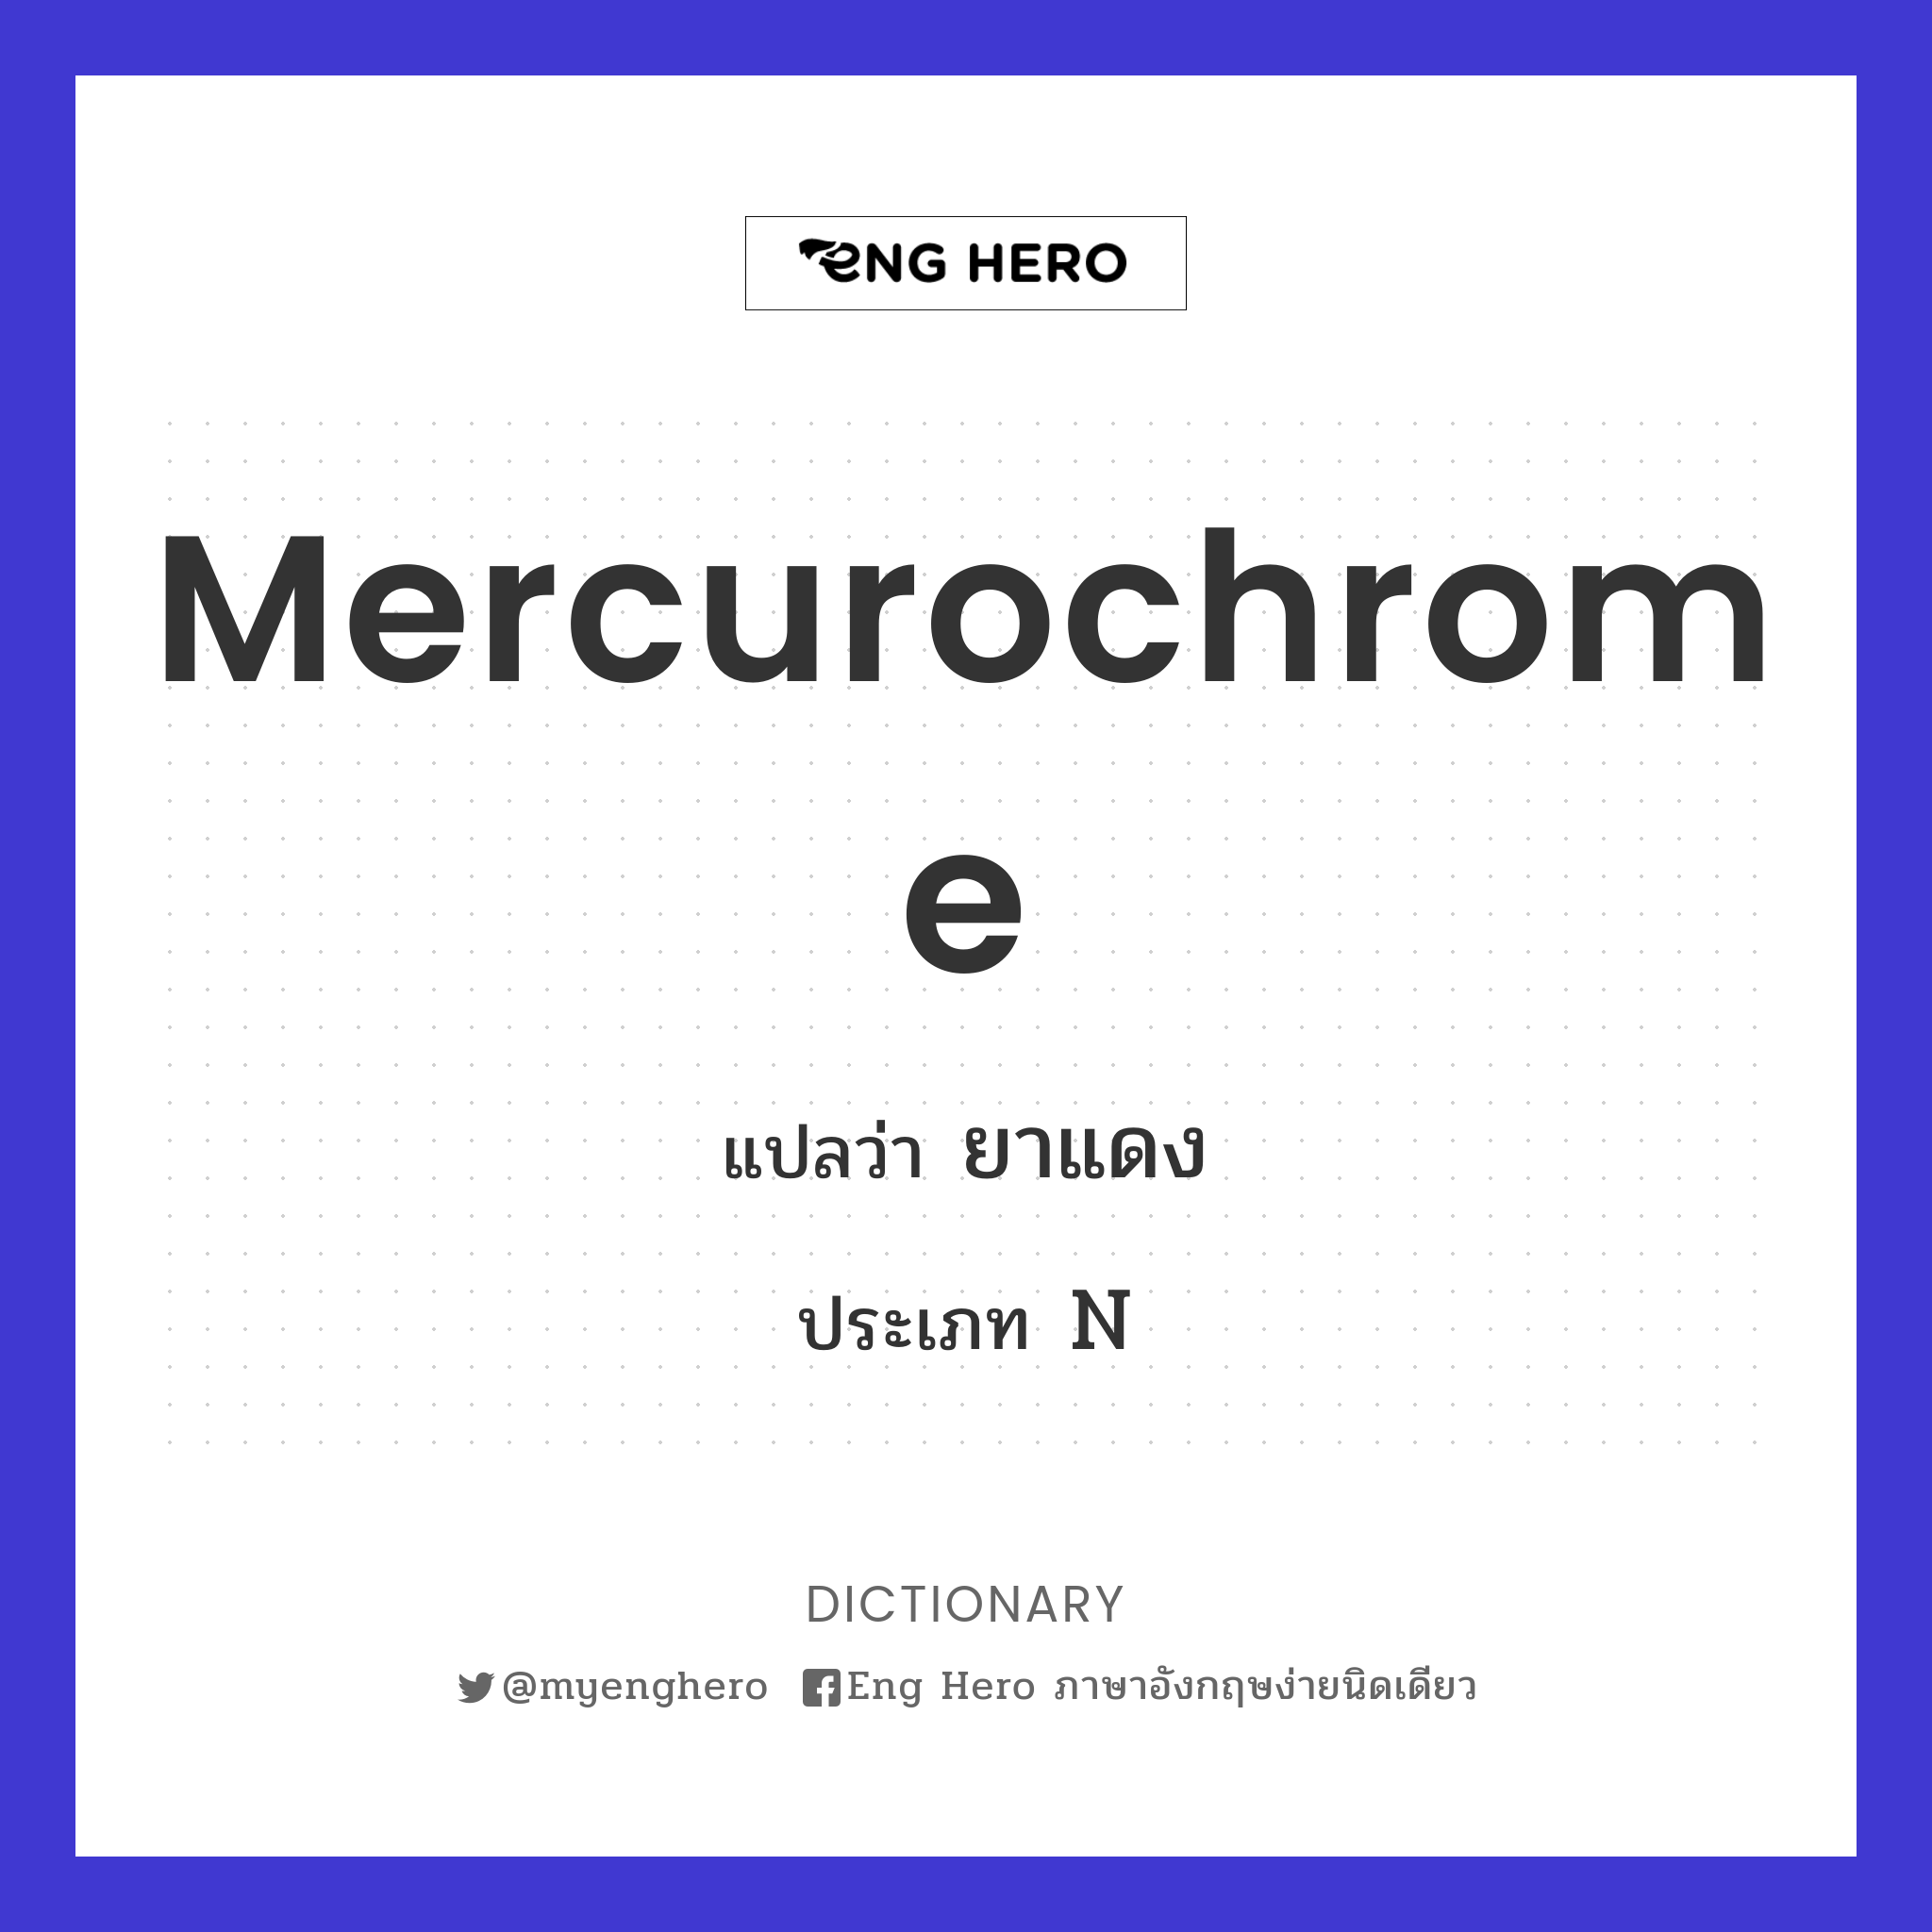 mercurochrome